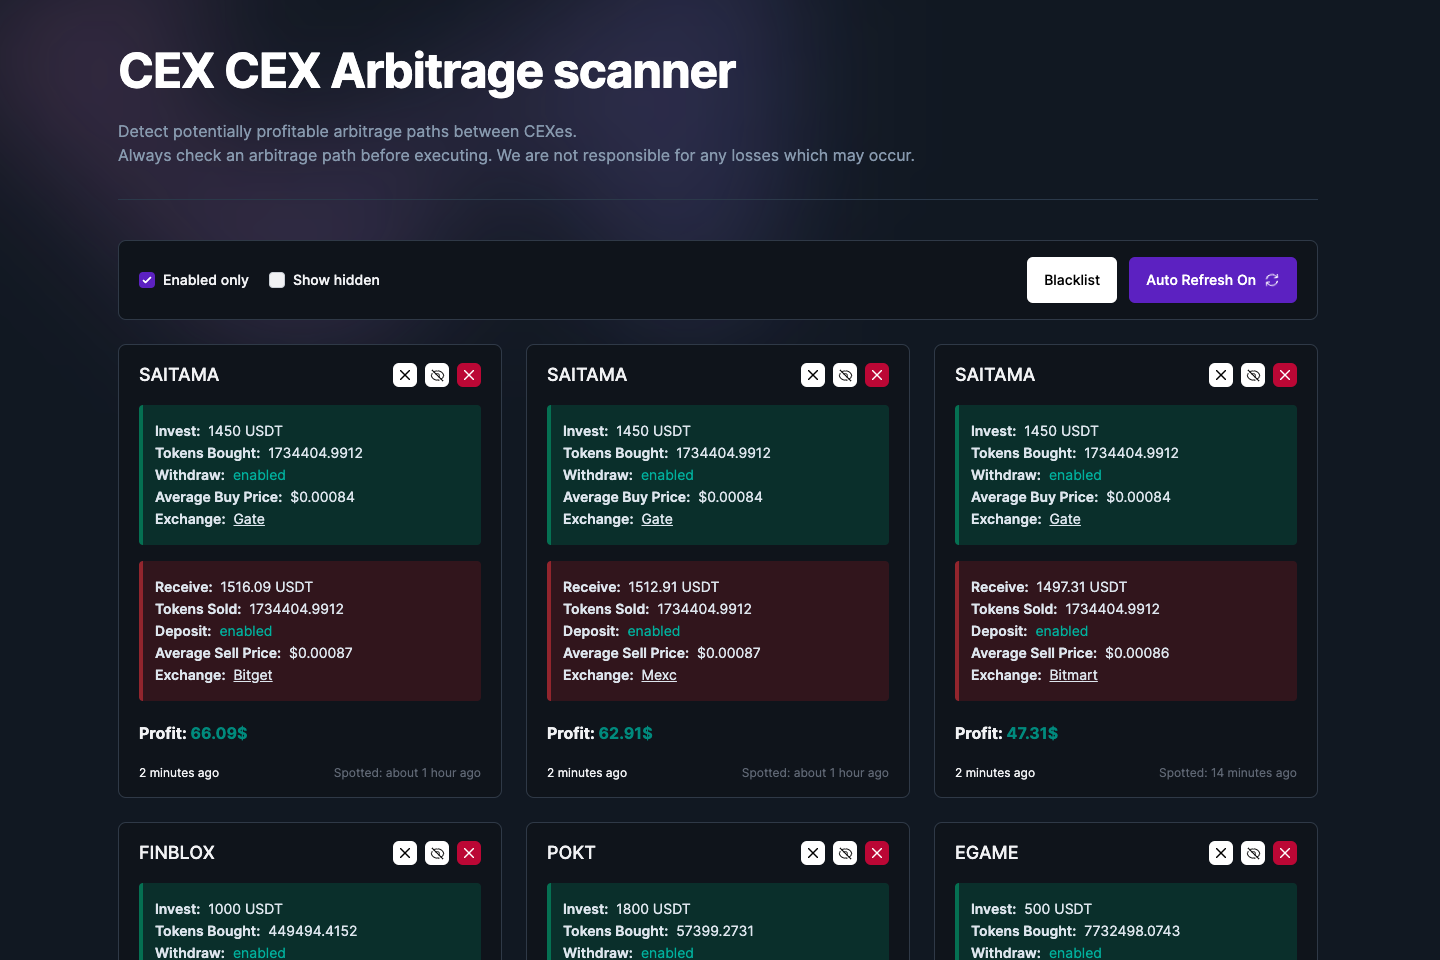 CEX CEX Arbitrage Scanner Alphador